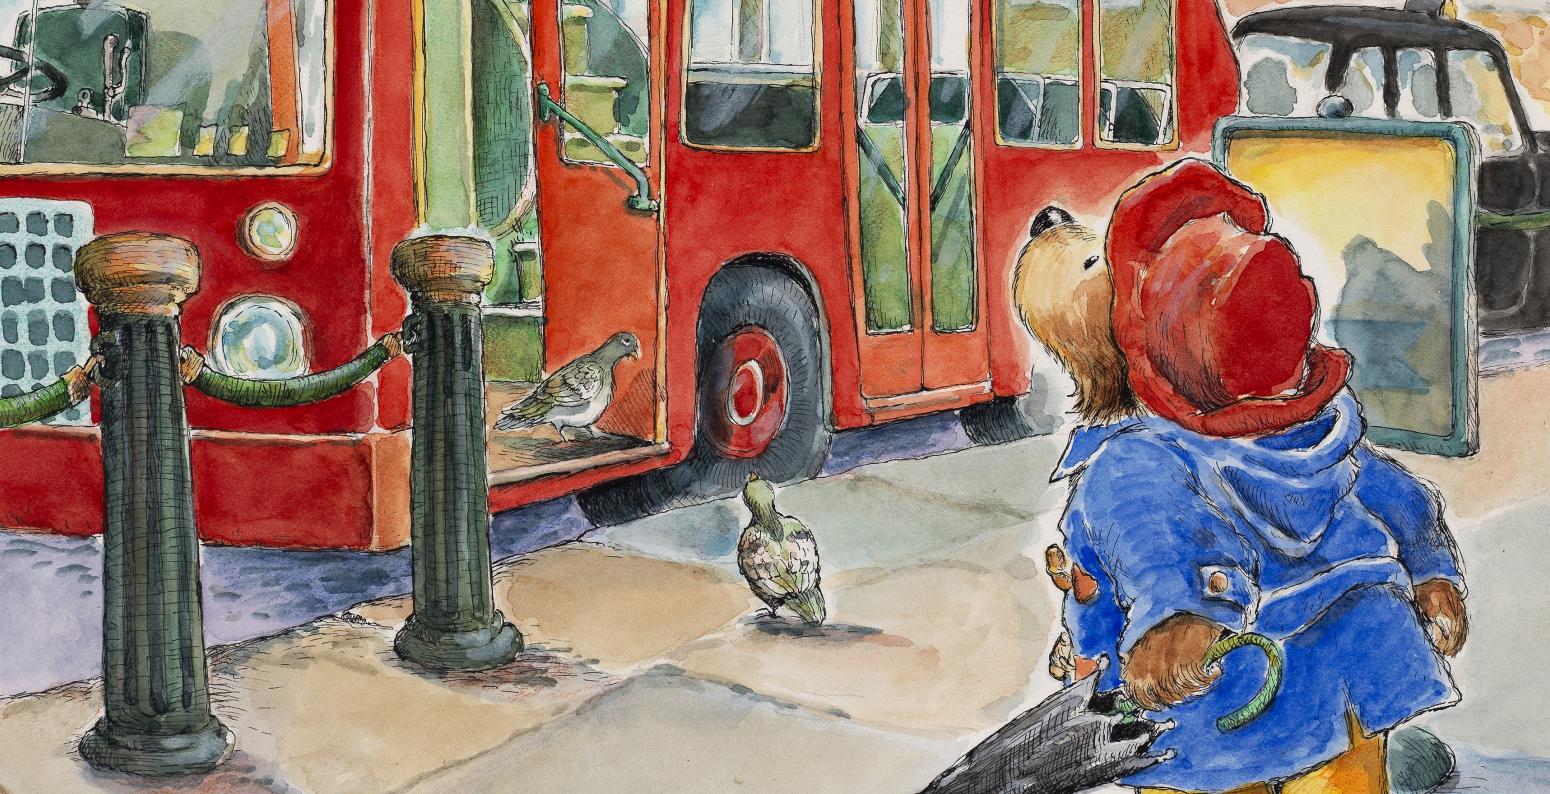 Illustration of Paddington looking at red bus. 